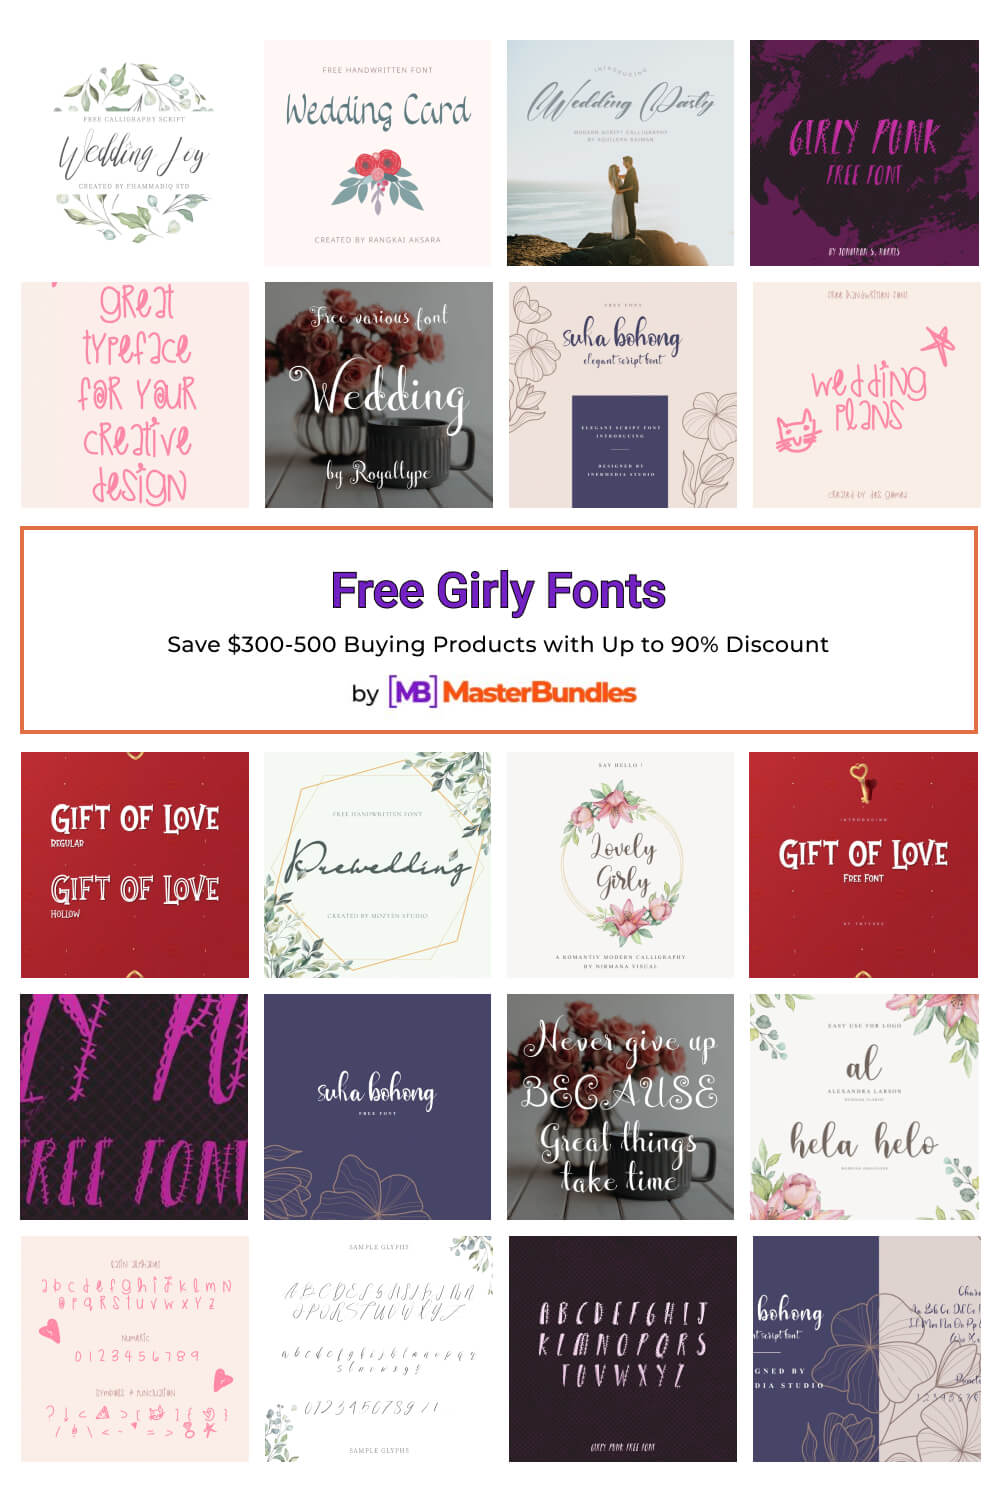 free girly fonts pinterest image.